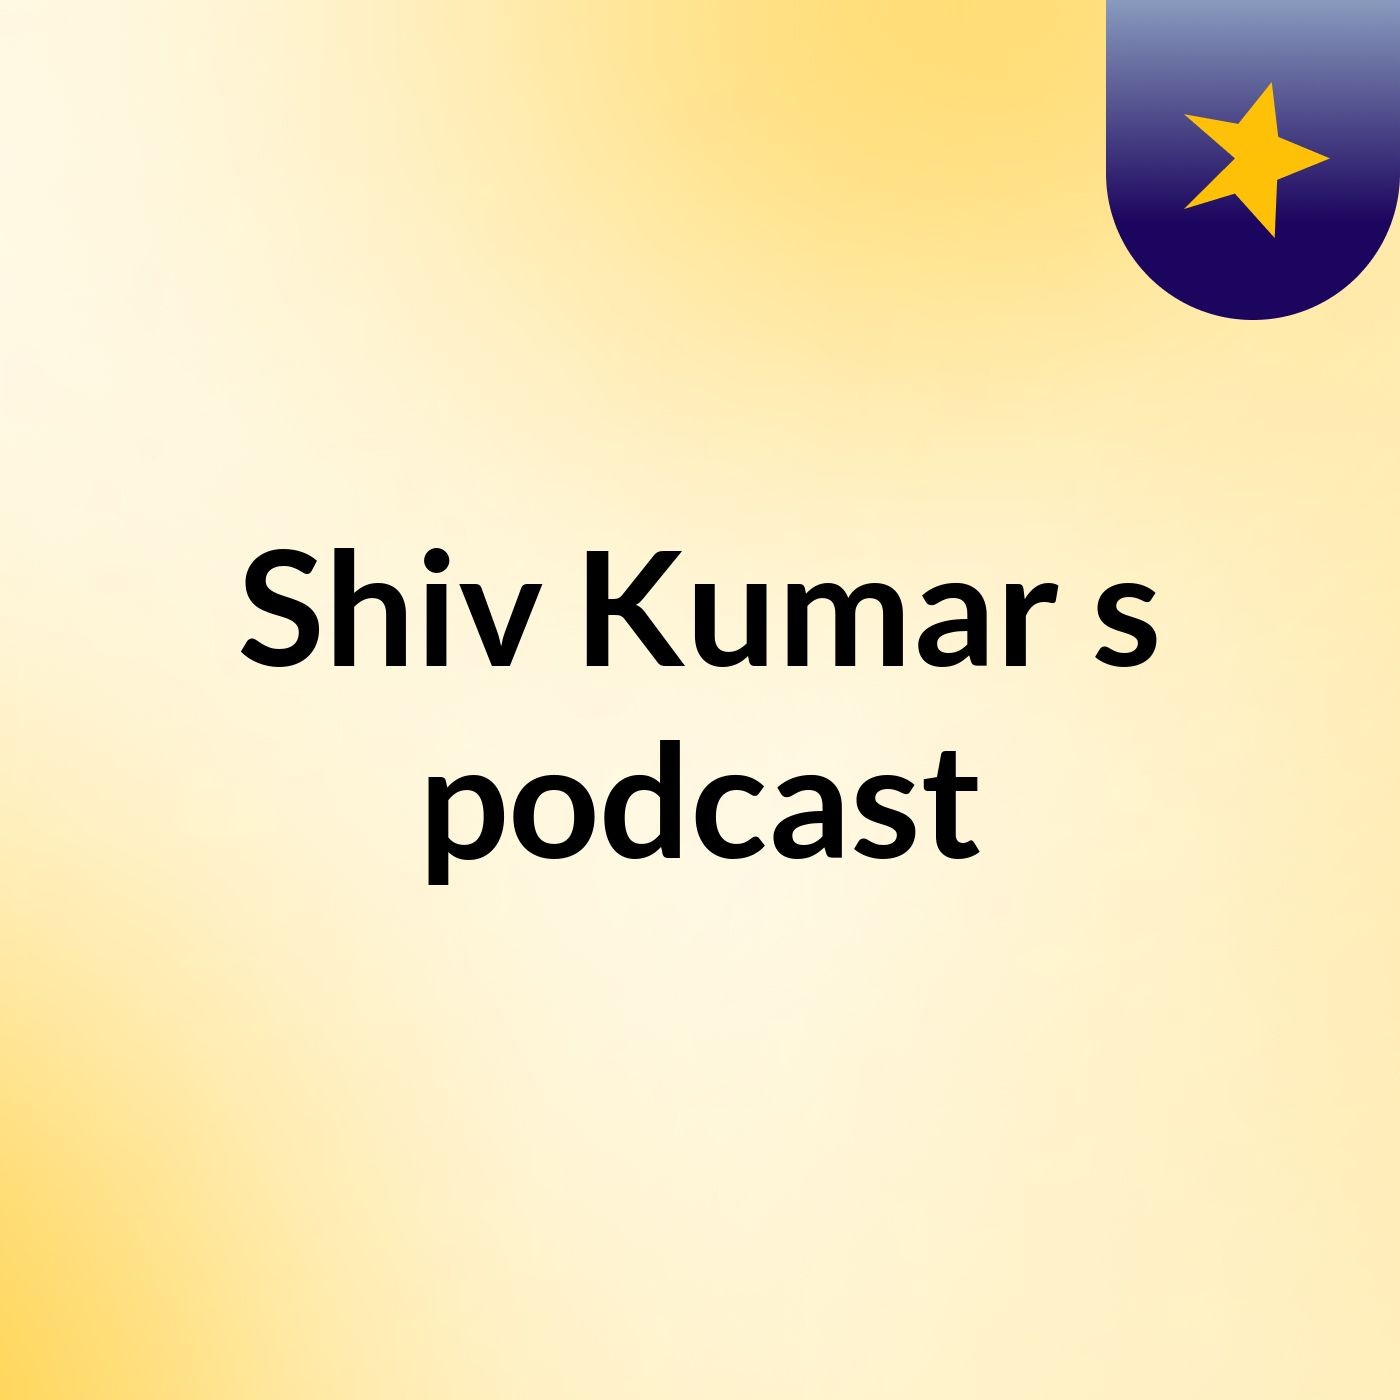 Episode 4 - Shiv Kumar's podcast